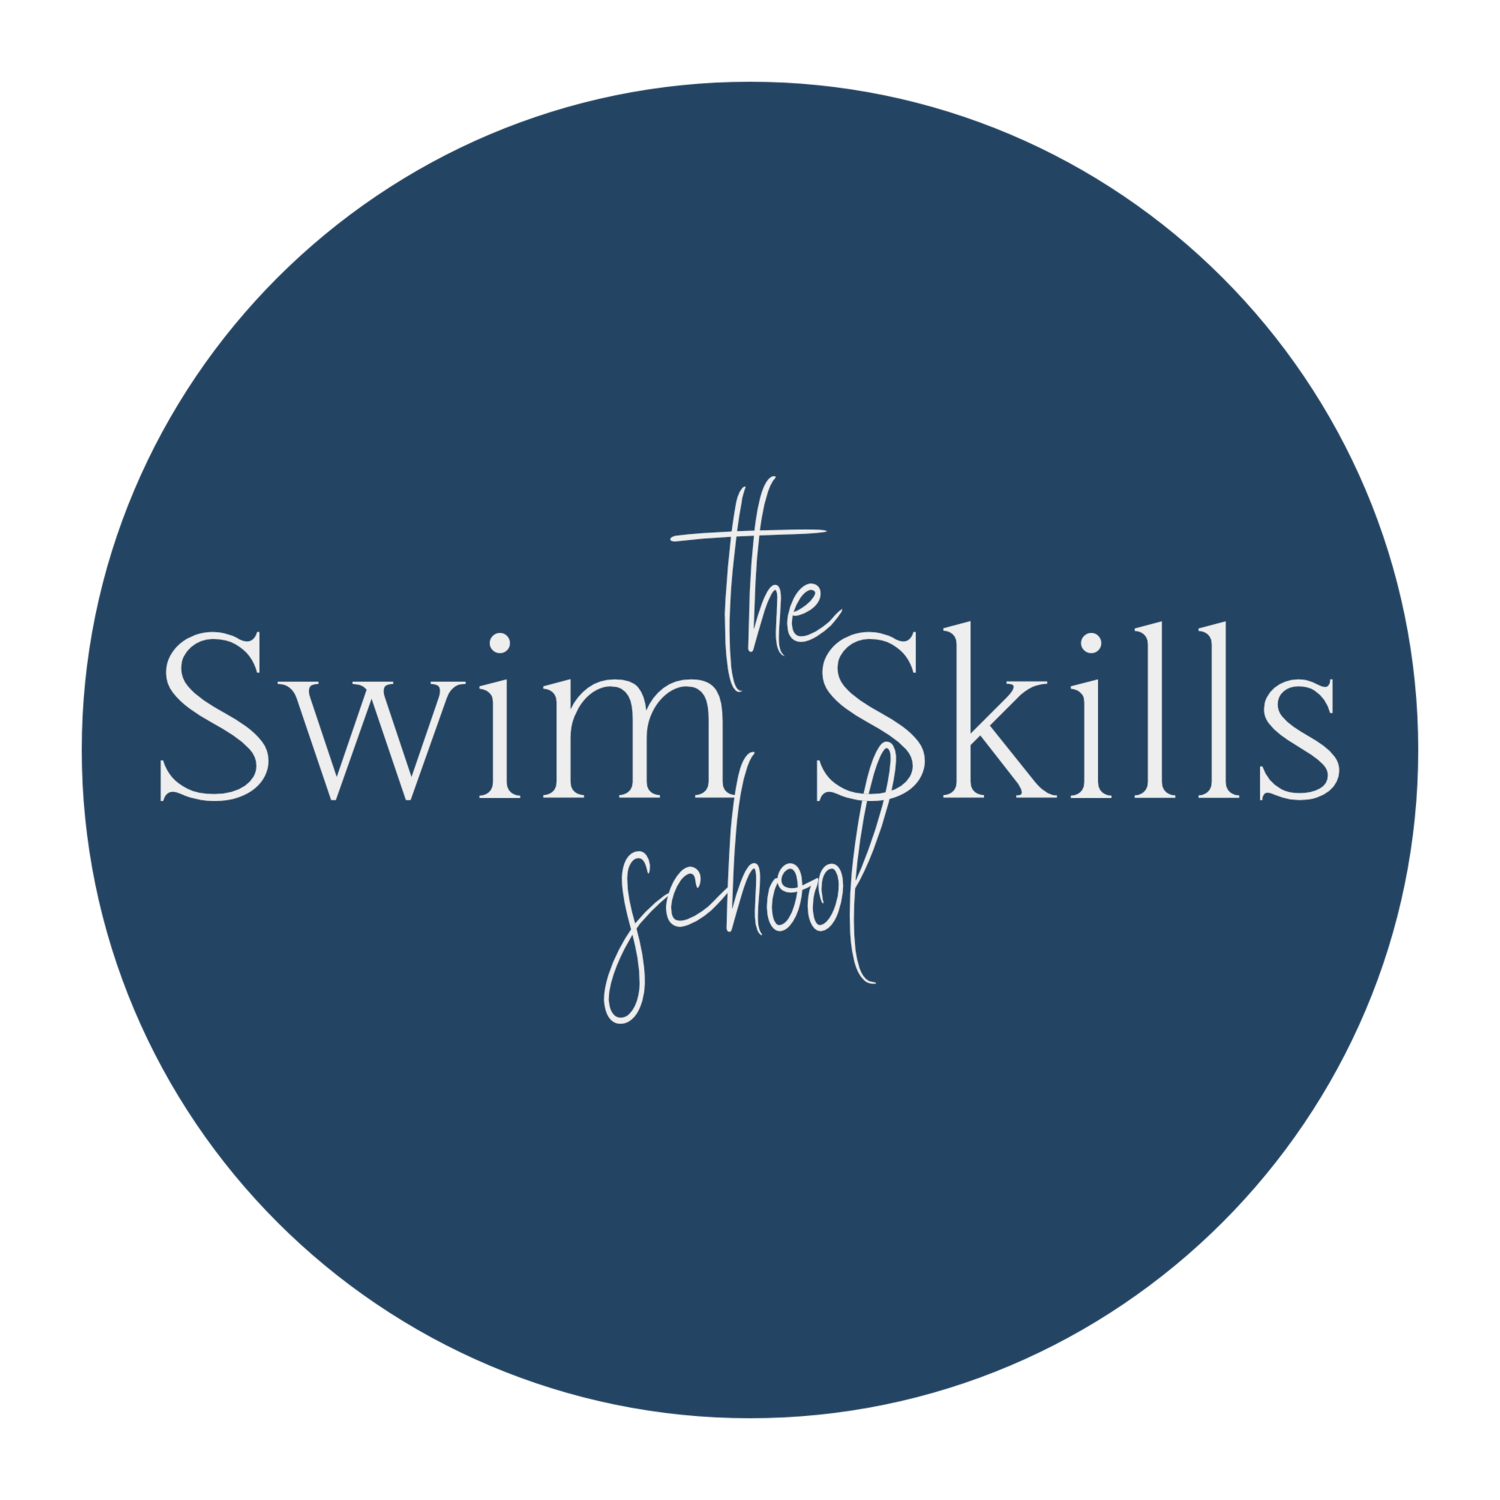 The Swim Skills School